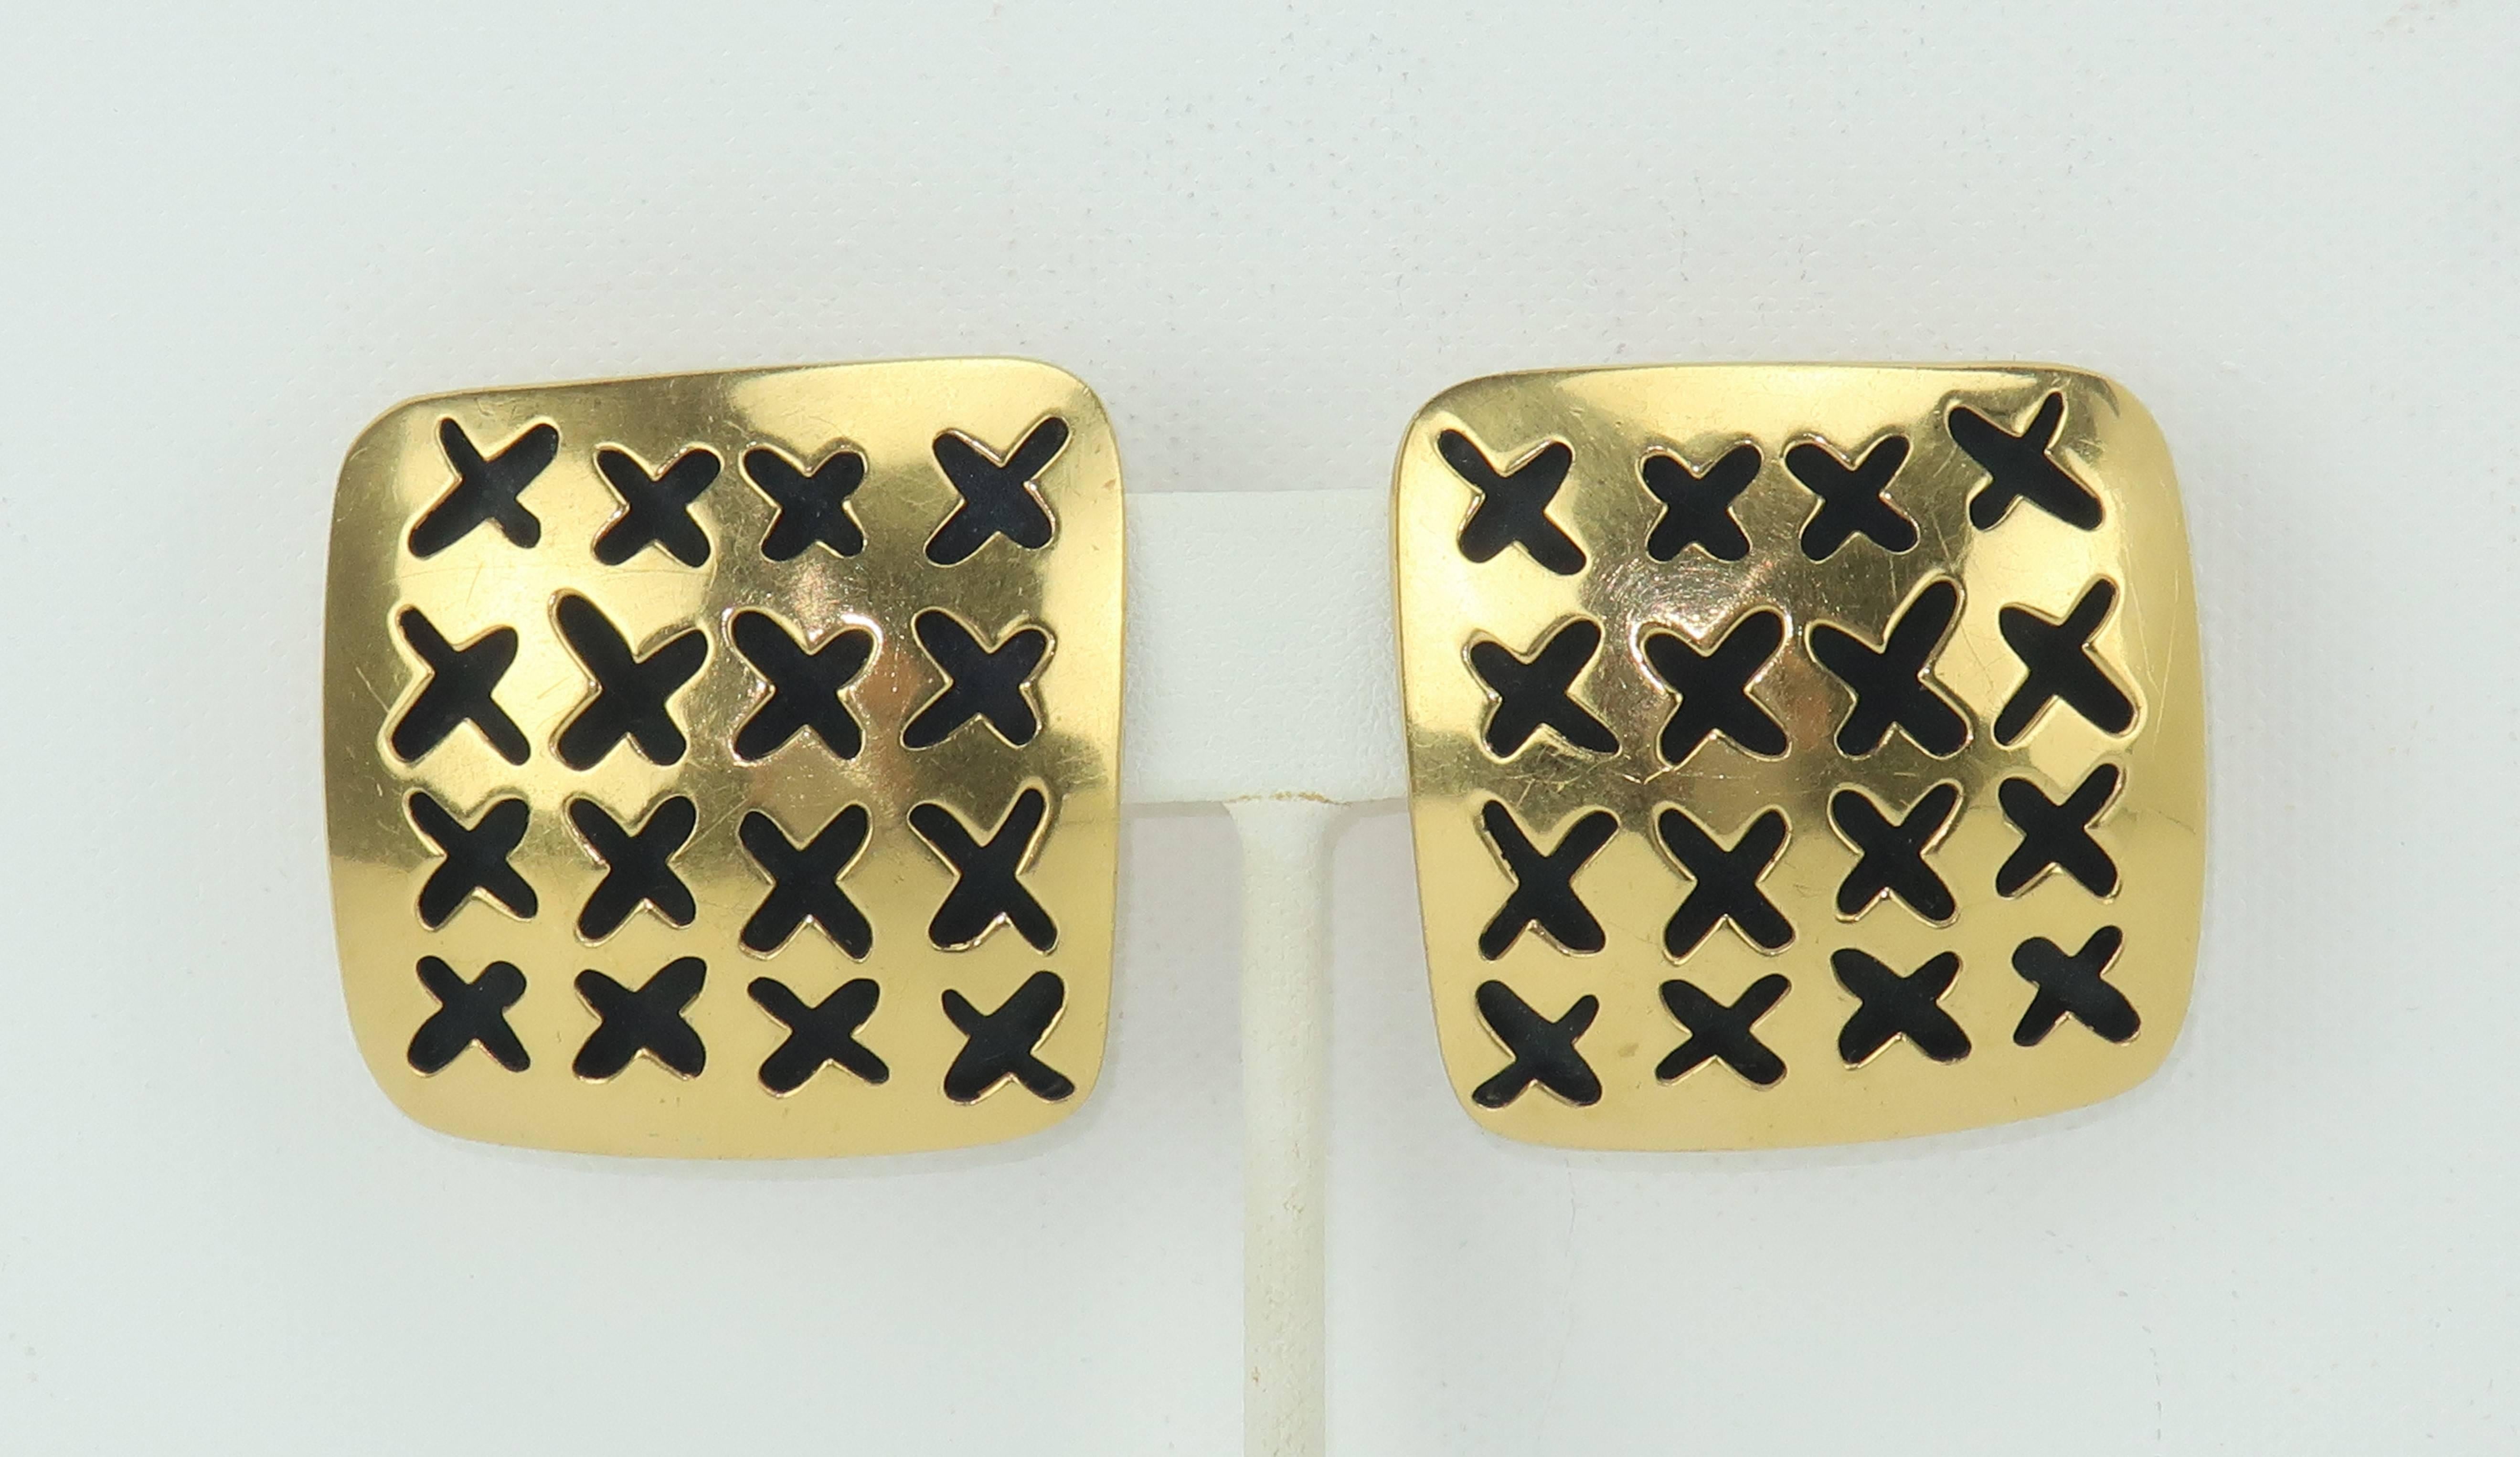 Vaubel Stylized Gold Vermeil Perforated 'X' Earrings 1